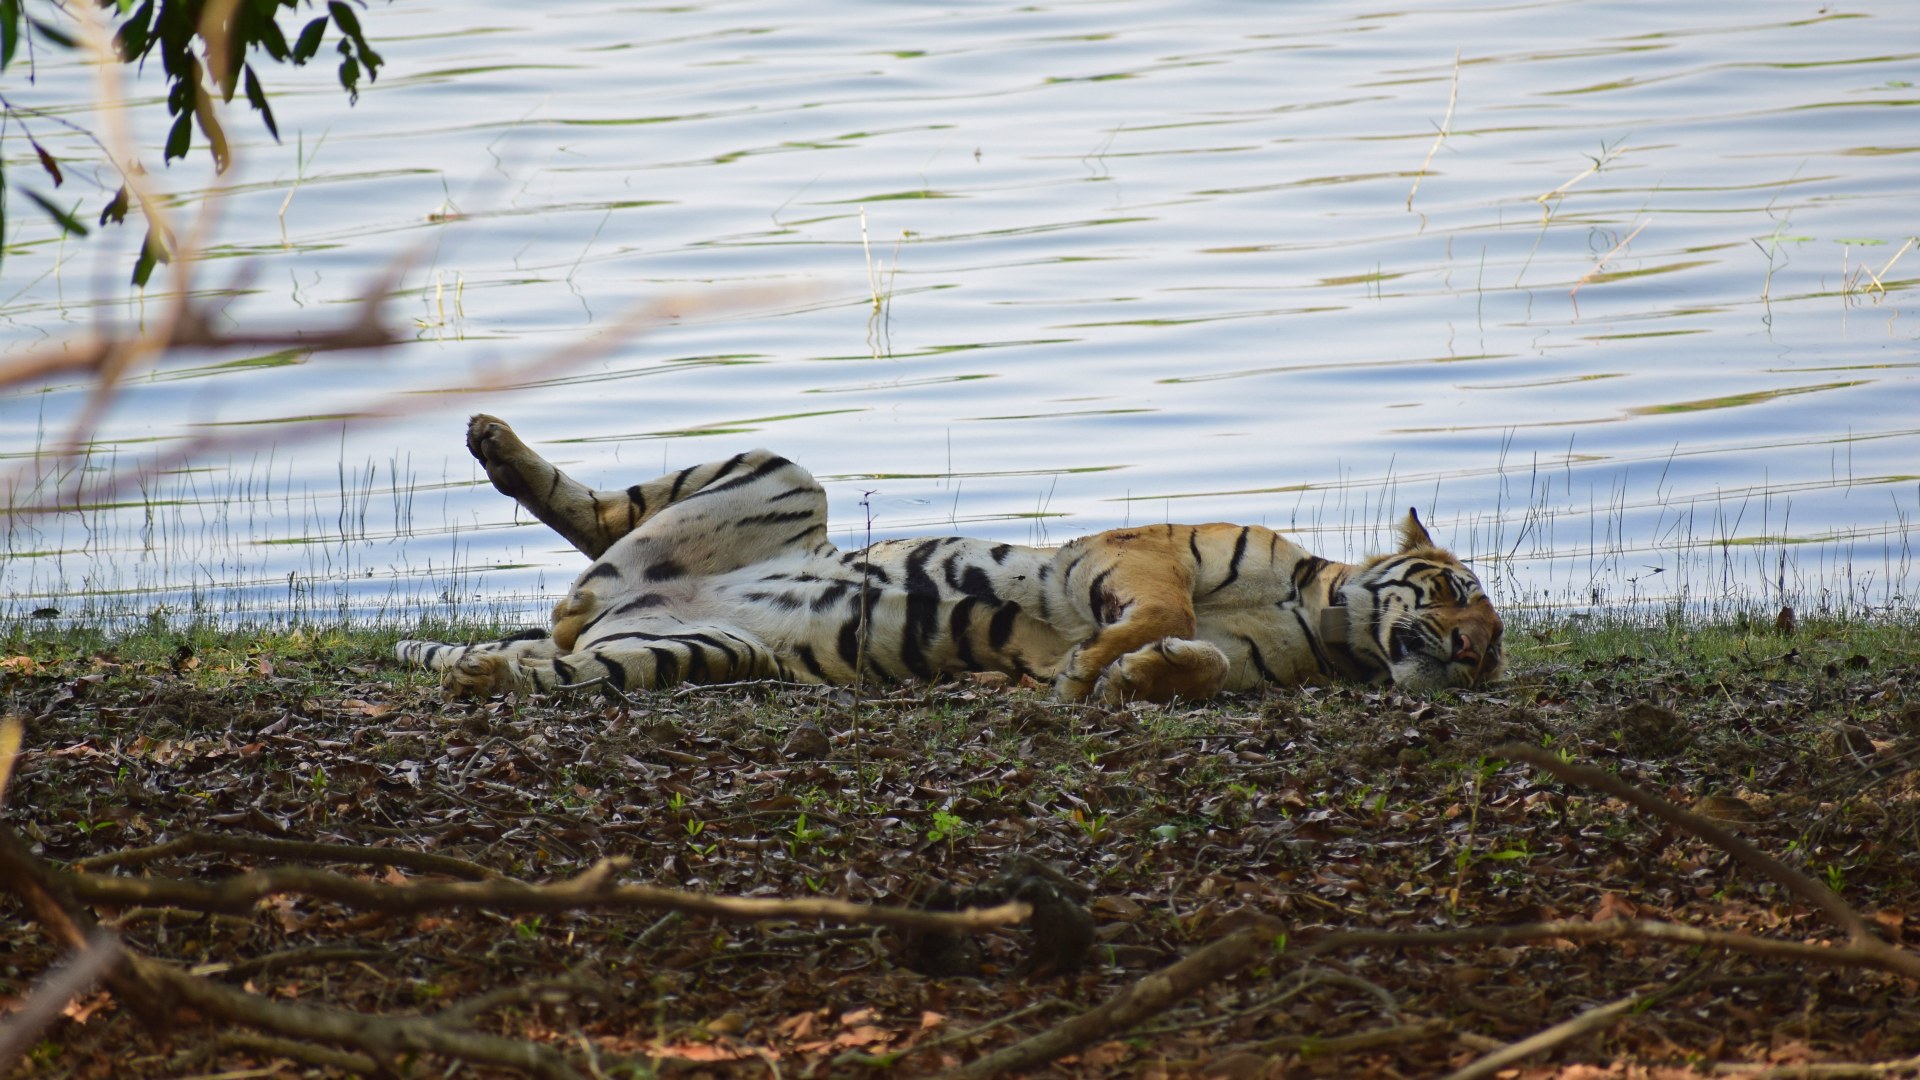 Tiger, Tadoba National Park